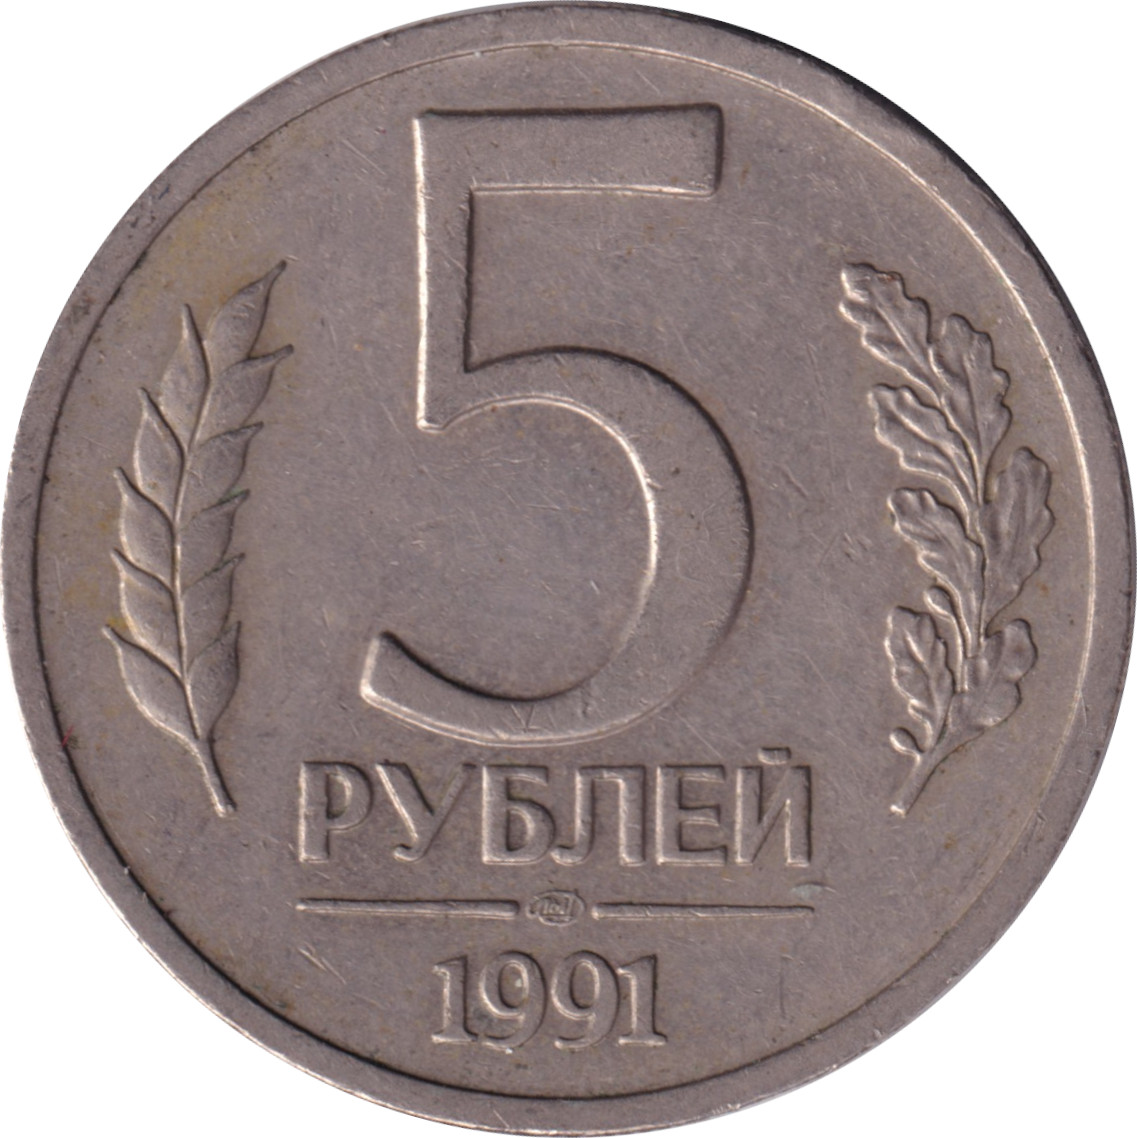 5 ruble - Monument